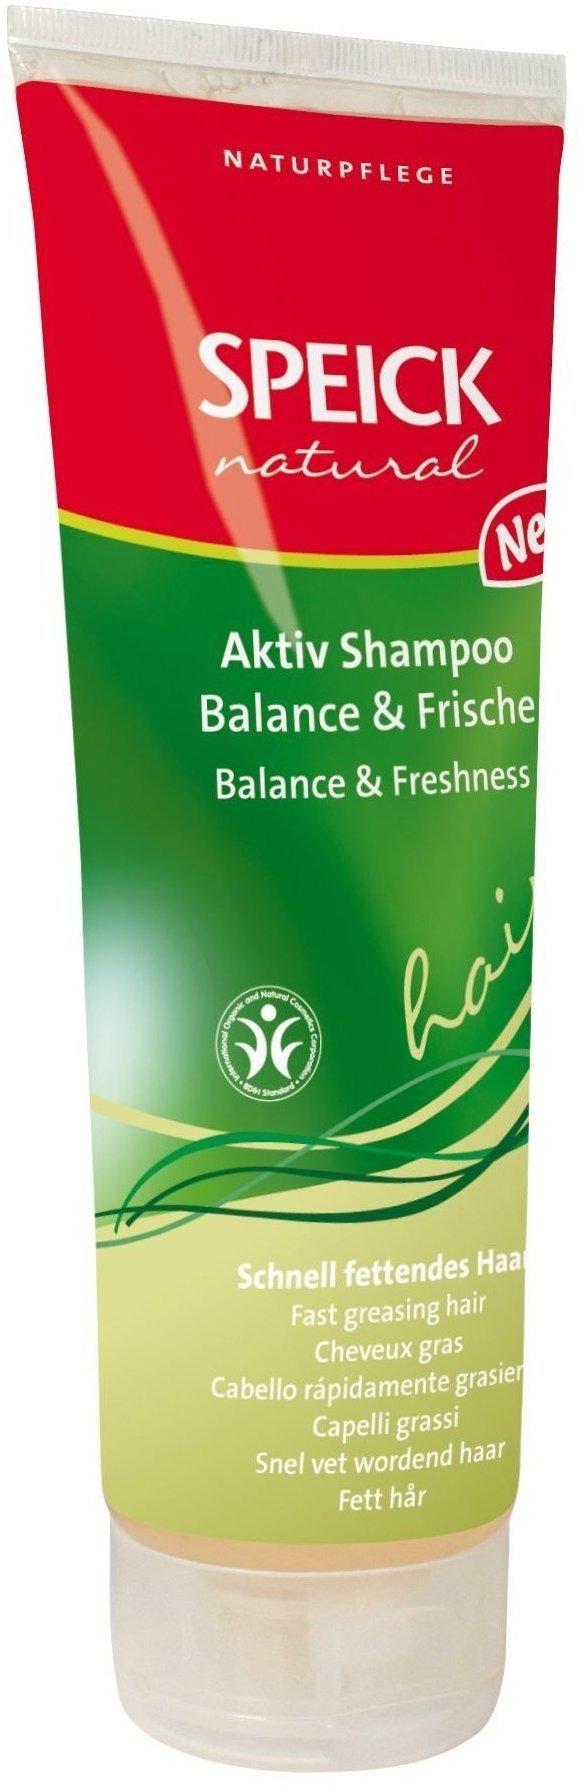 Speick Natural Aktiv Balance & Frische Shampoo (200ml) Test: ❤️ TOP  Angebote ab 3,95 € (Juni 2022) Testbericht.de